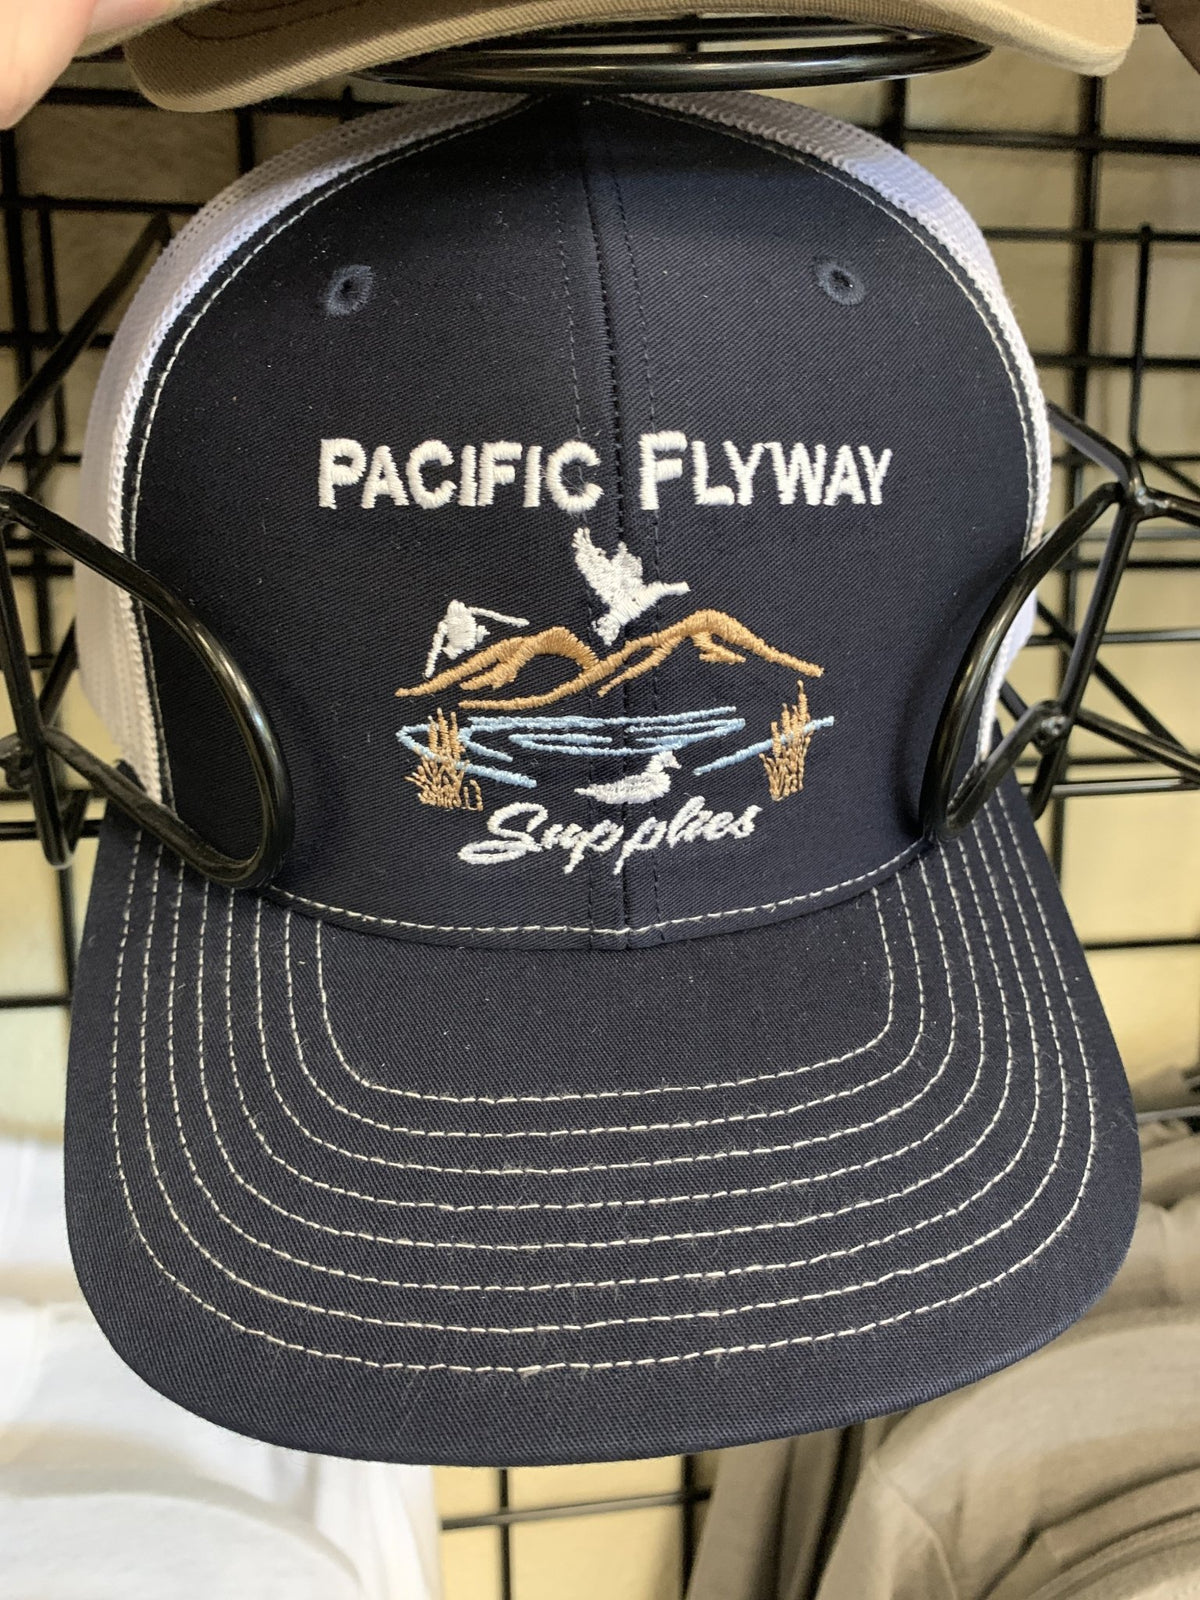 Pacific Flyway Supplies Logo Mesh Snap Back Hat Navy Blue/White - Pacific Flyway Supplies